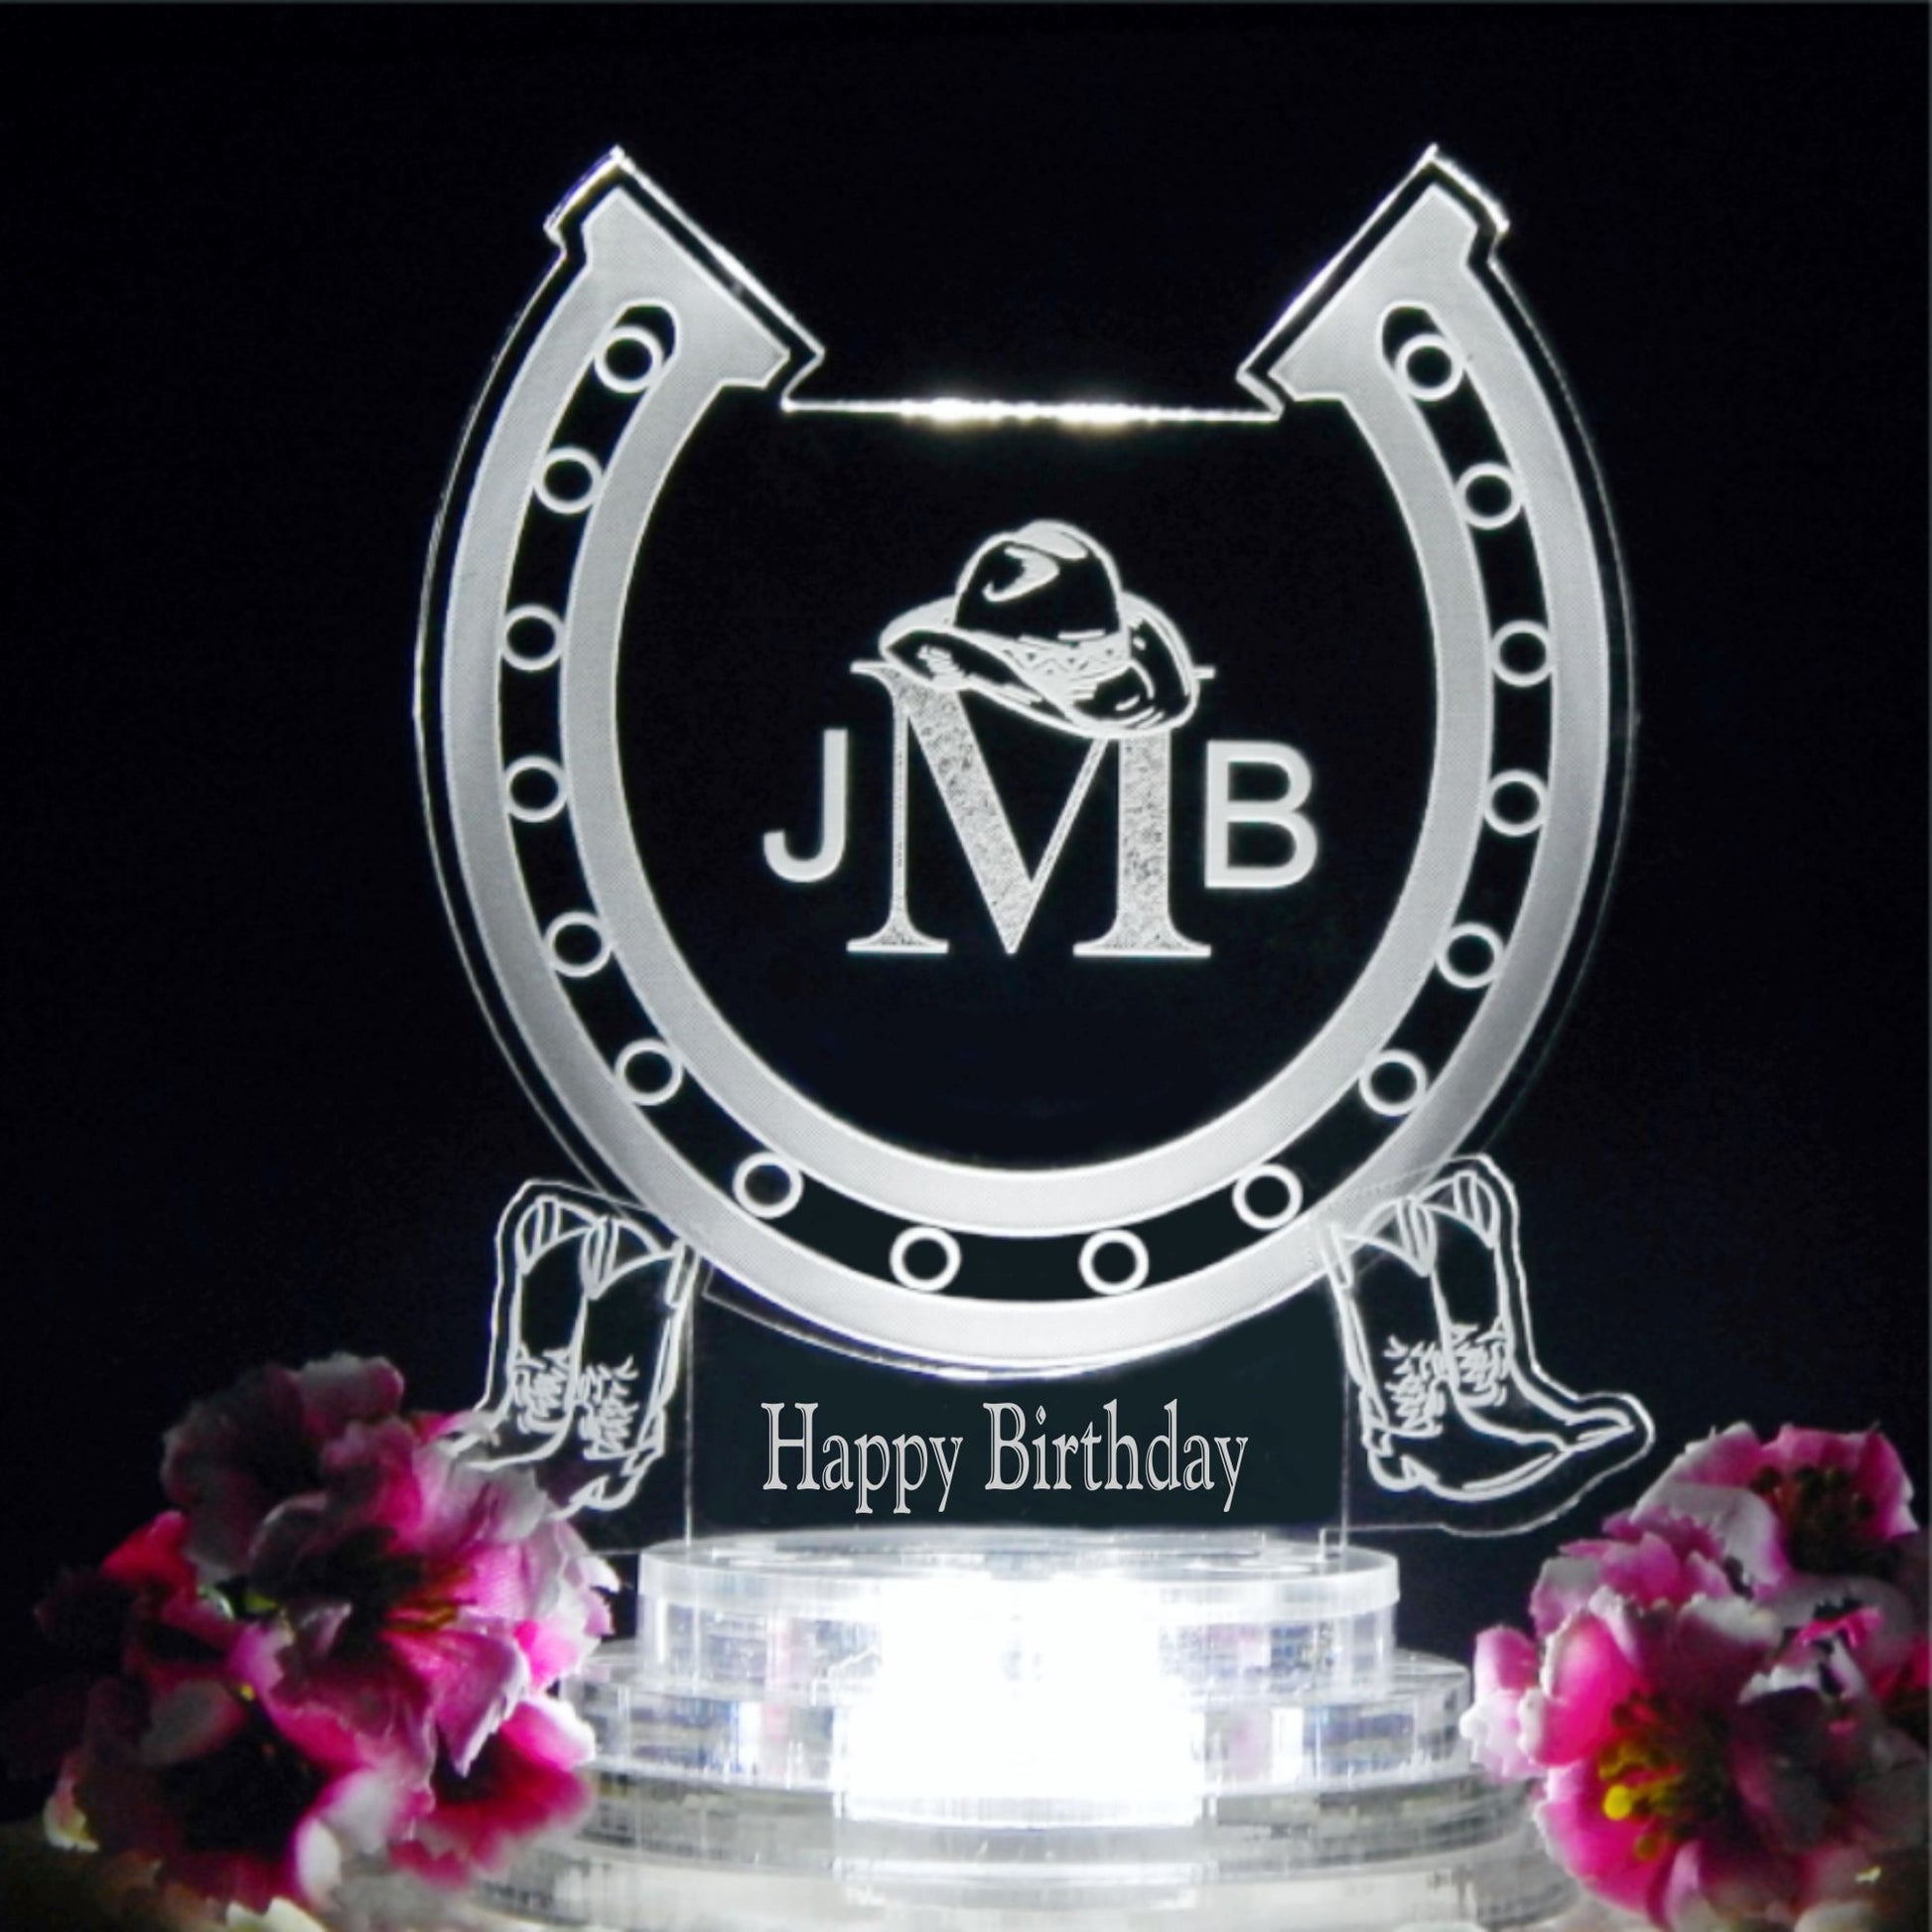  horseshoe shaped acrylic cake topper designed with a horseshoe design and engraved with monogram and Happy Birthday